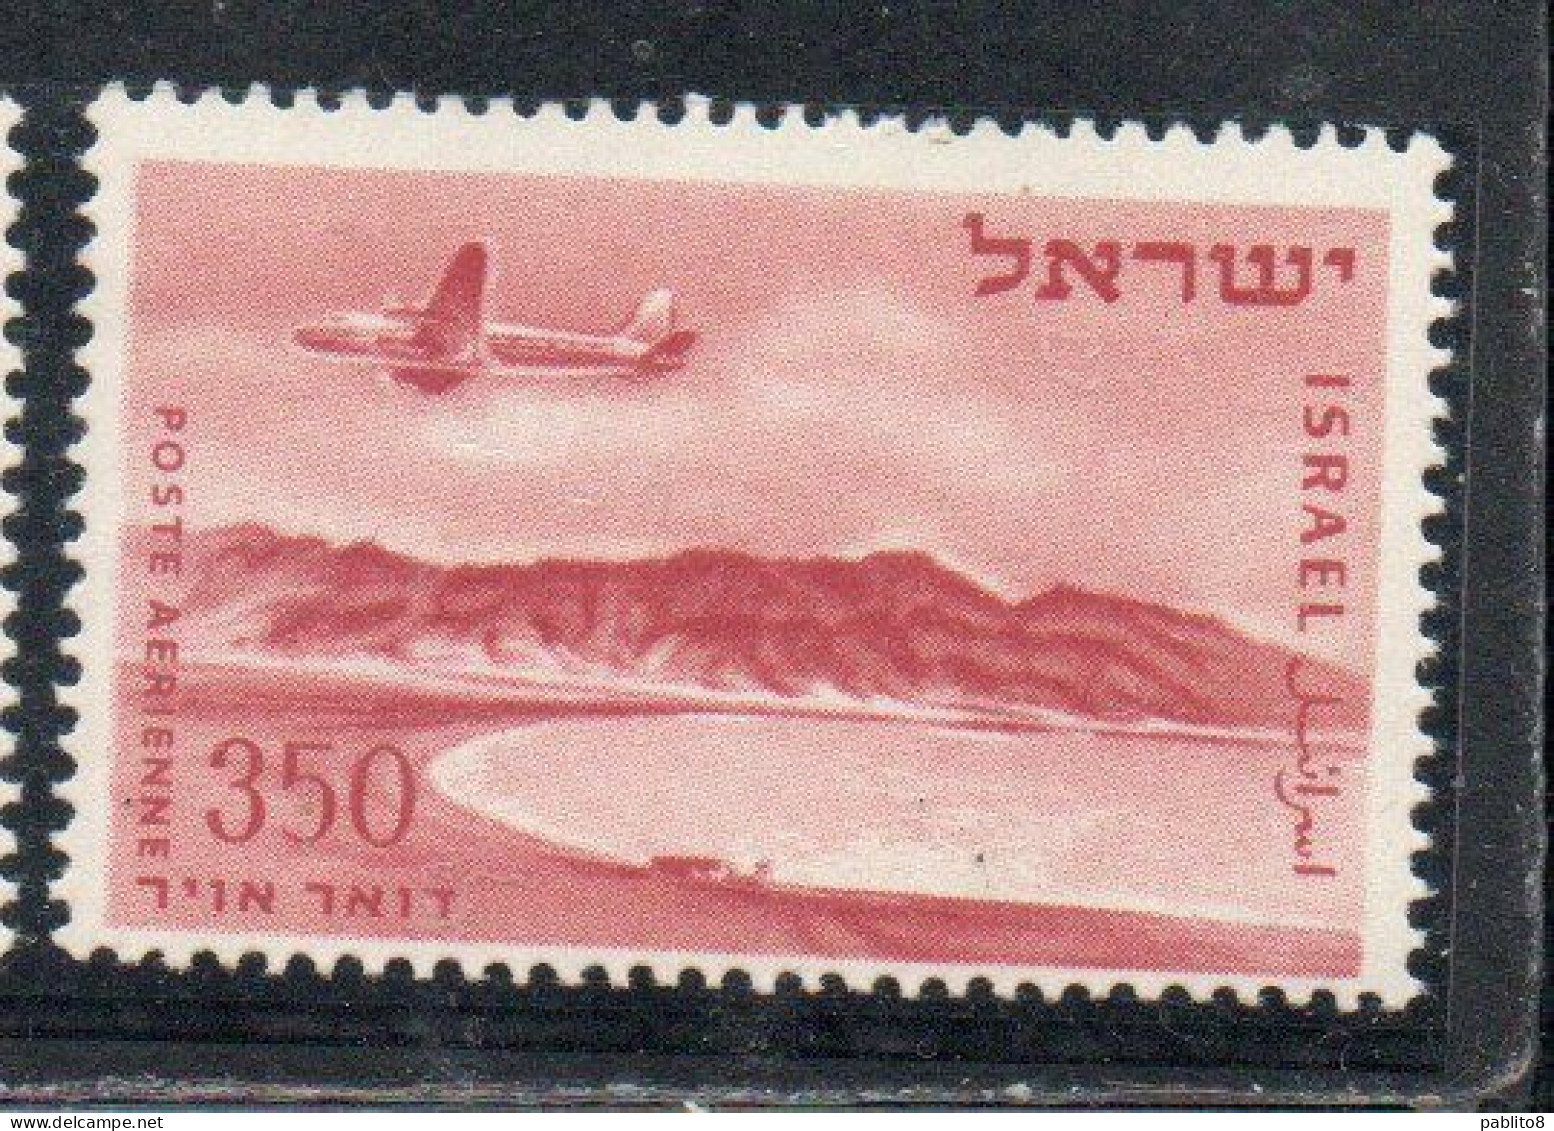 ISRAEL ISRAELE 1953 1956 AIRMAIL AIR POST MAIL BAY OF ELAT RED SEA 350p MNH - Luftpost